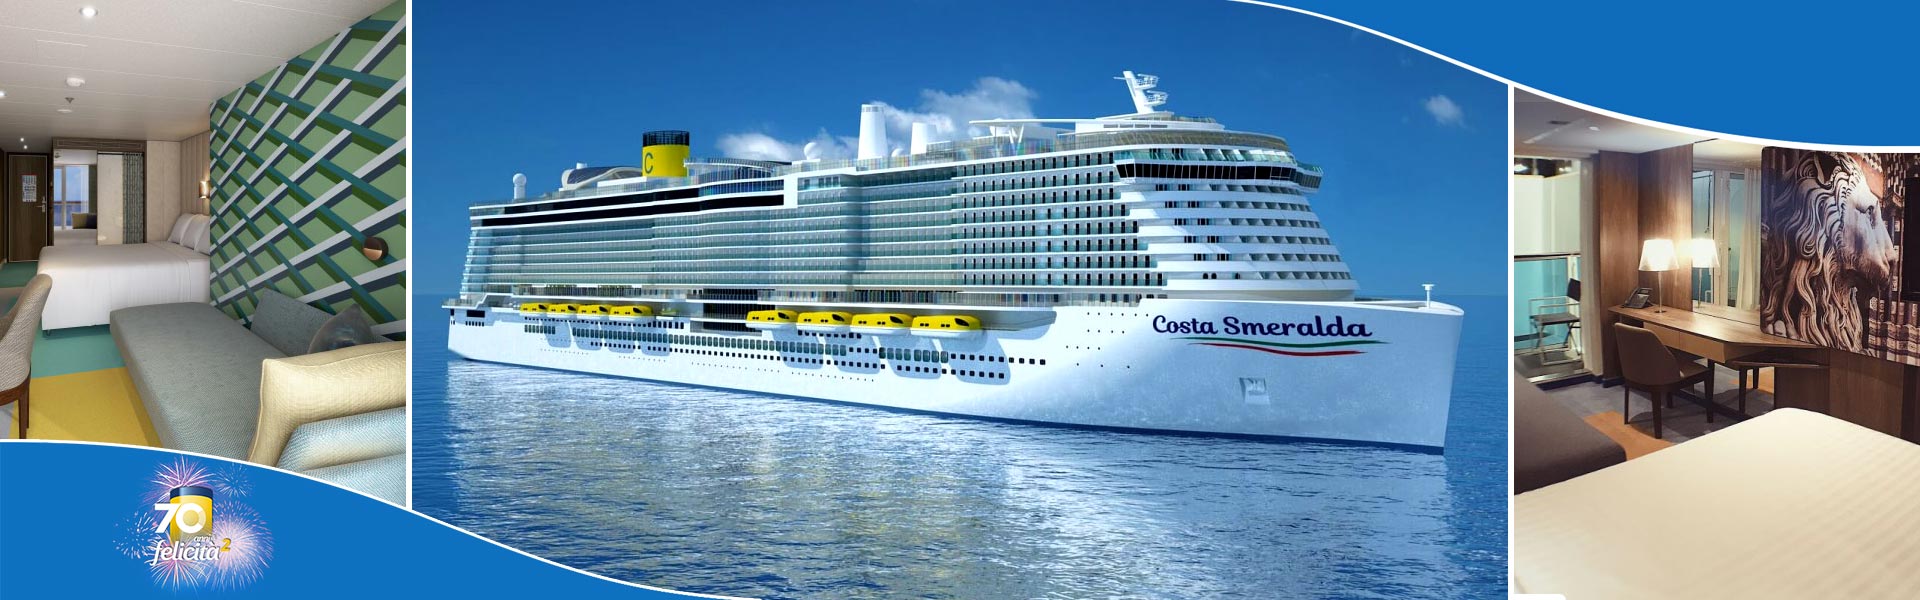 Costa Smeralda, la nuova nave Costa Crociere 2019